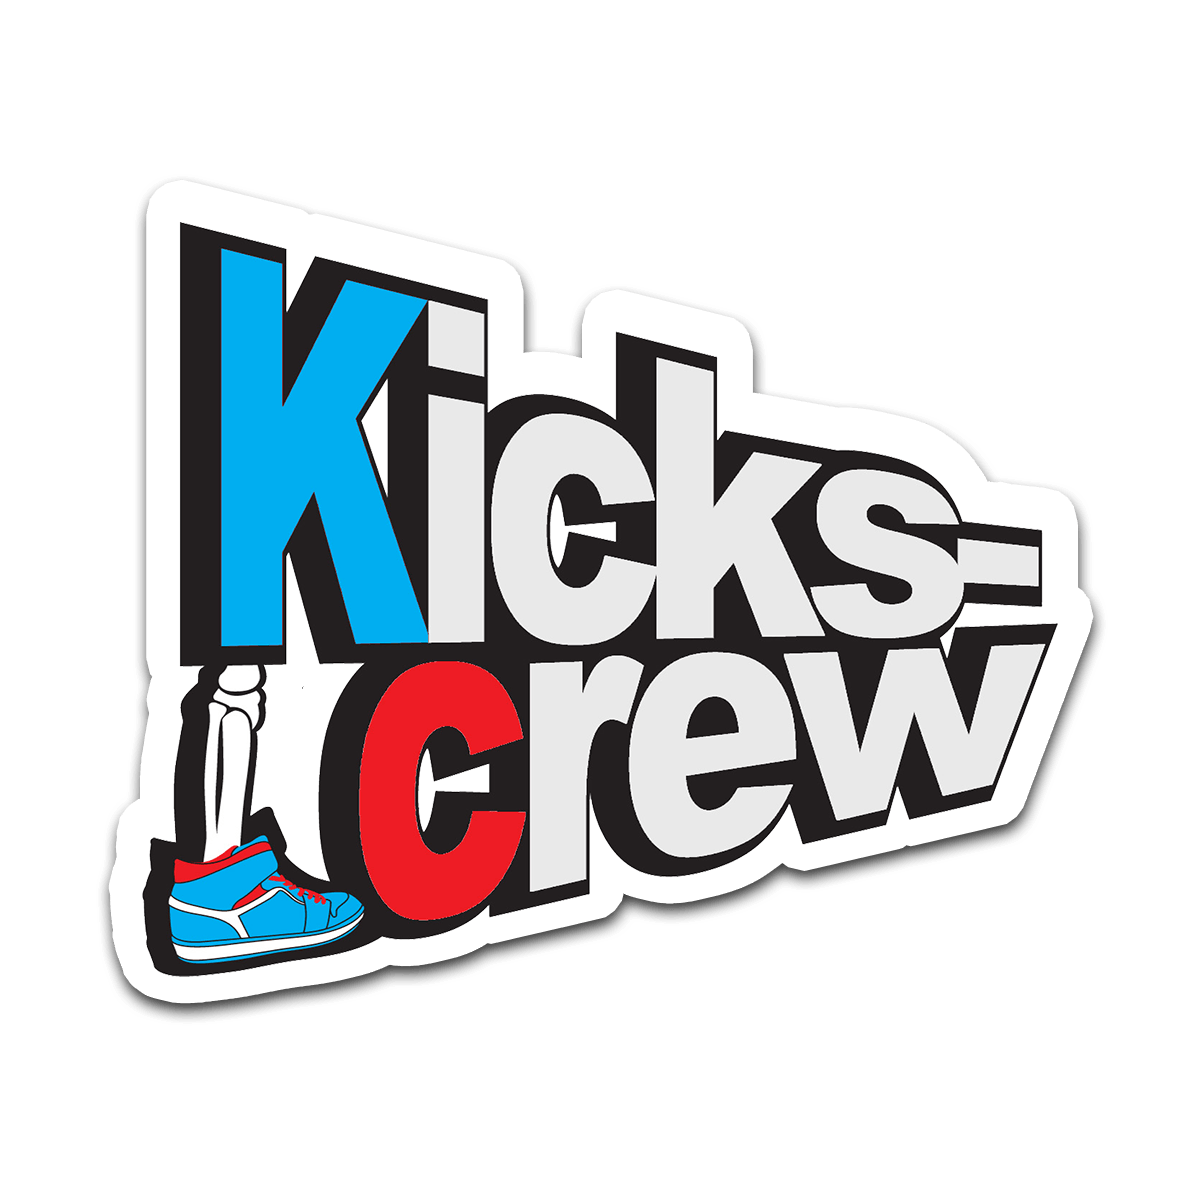 Supreme Nike Logo - KicksCrew. A largest legit, authentic Supreme, Nike, Adidas, Jordan